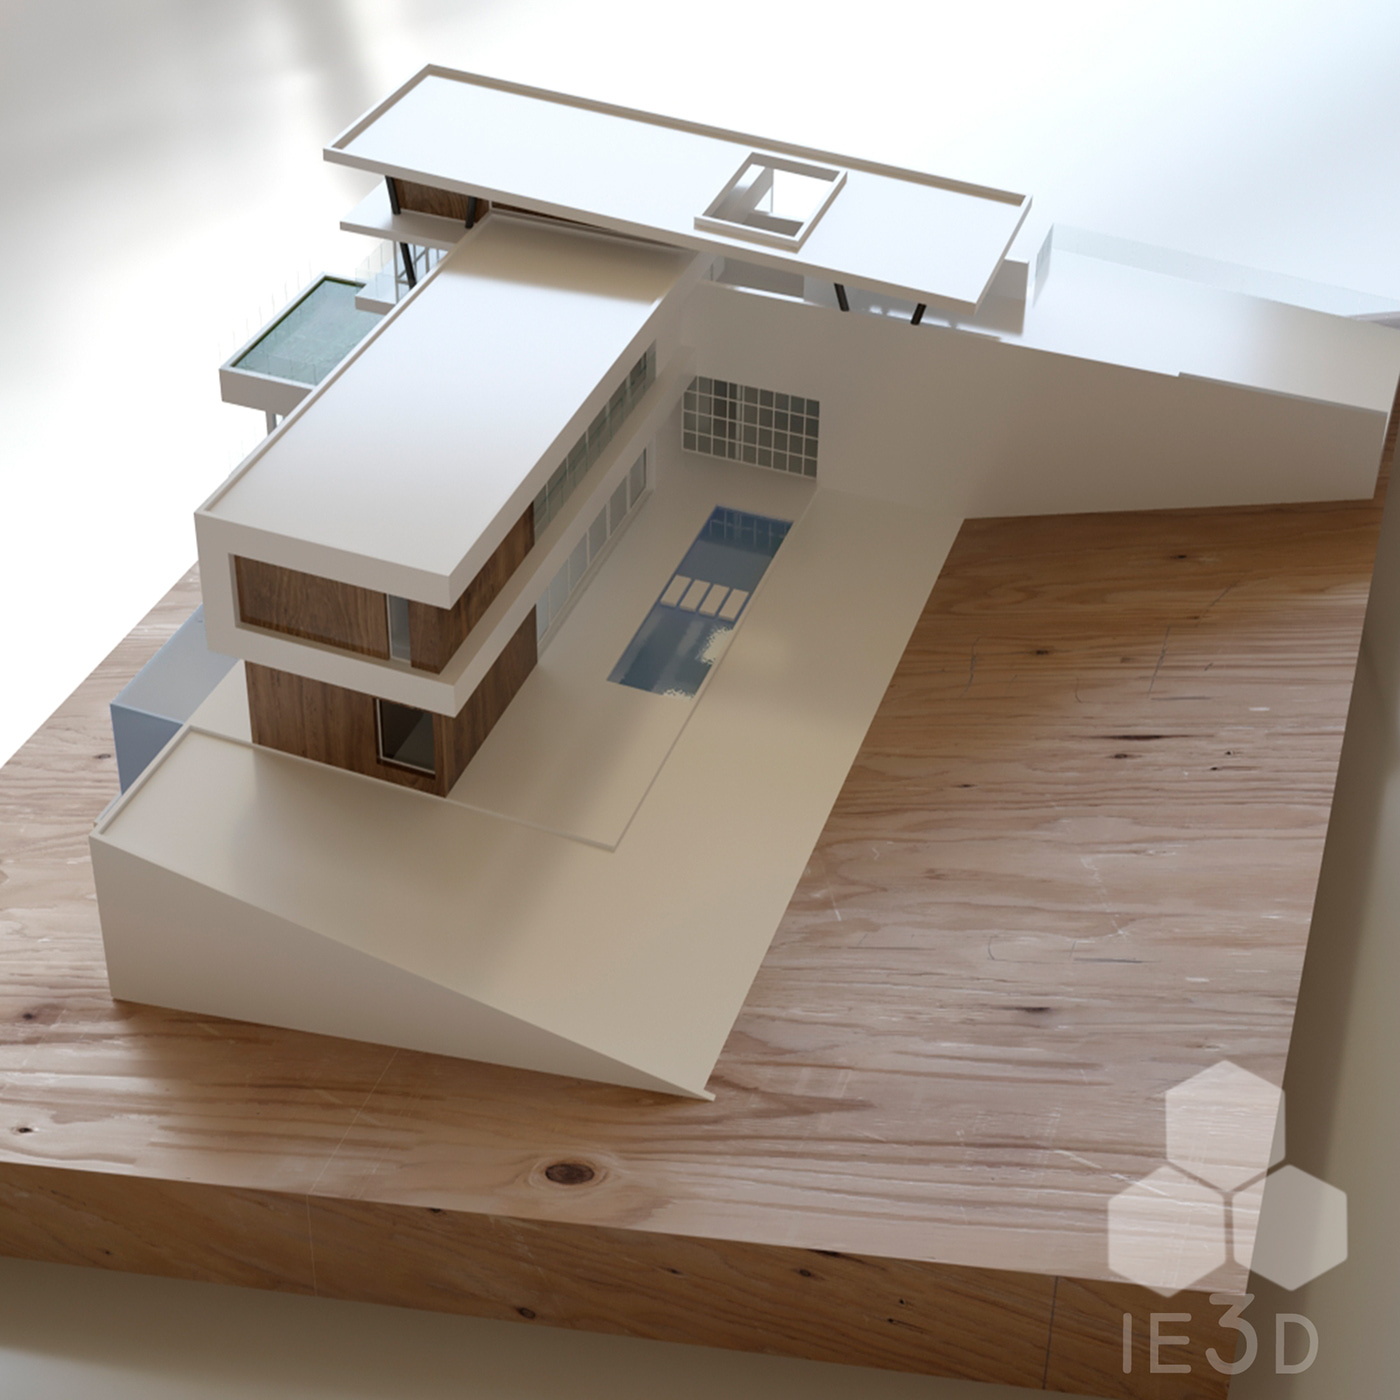 Maqueta 3D Render arquitectura argentina ie3d